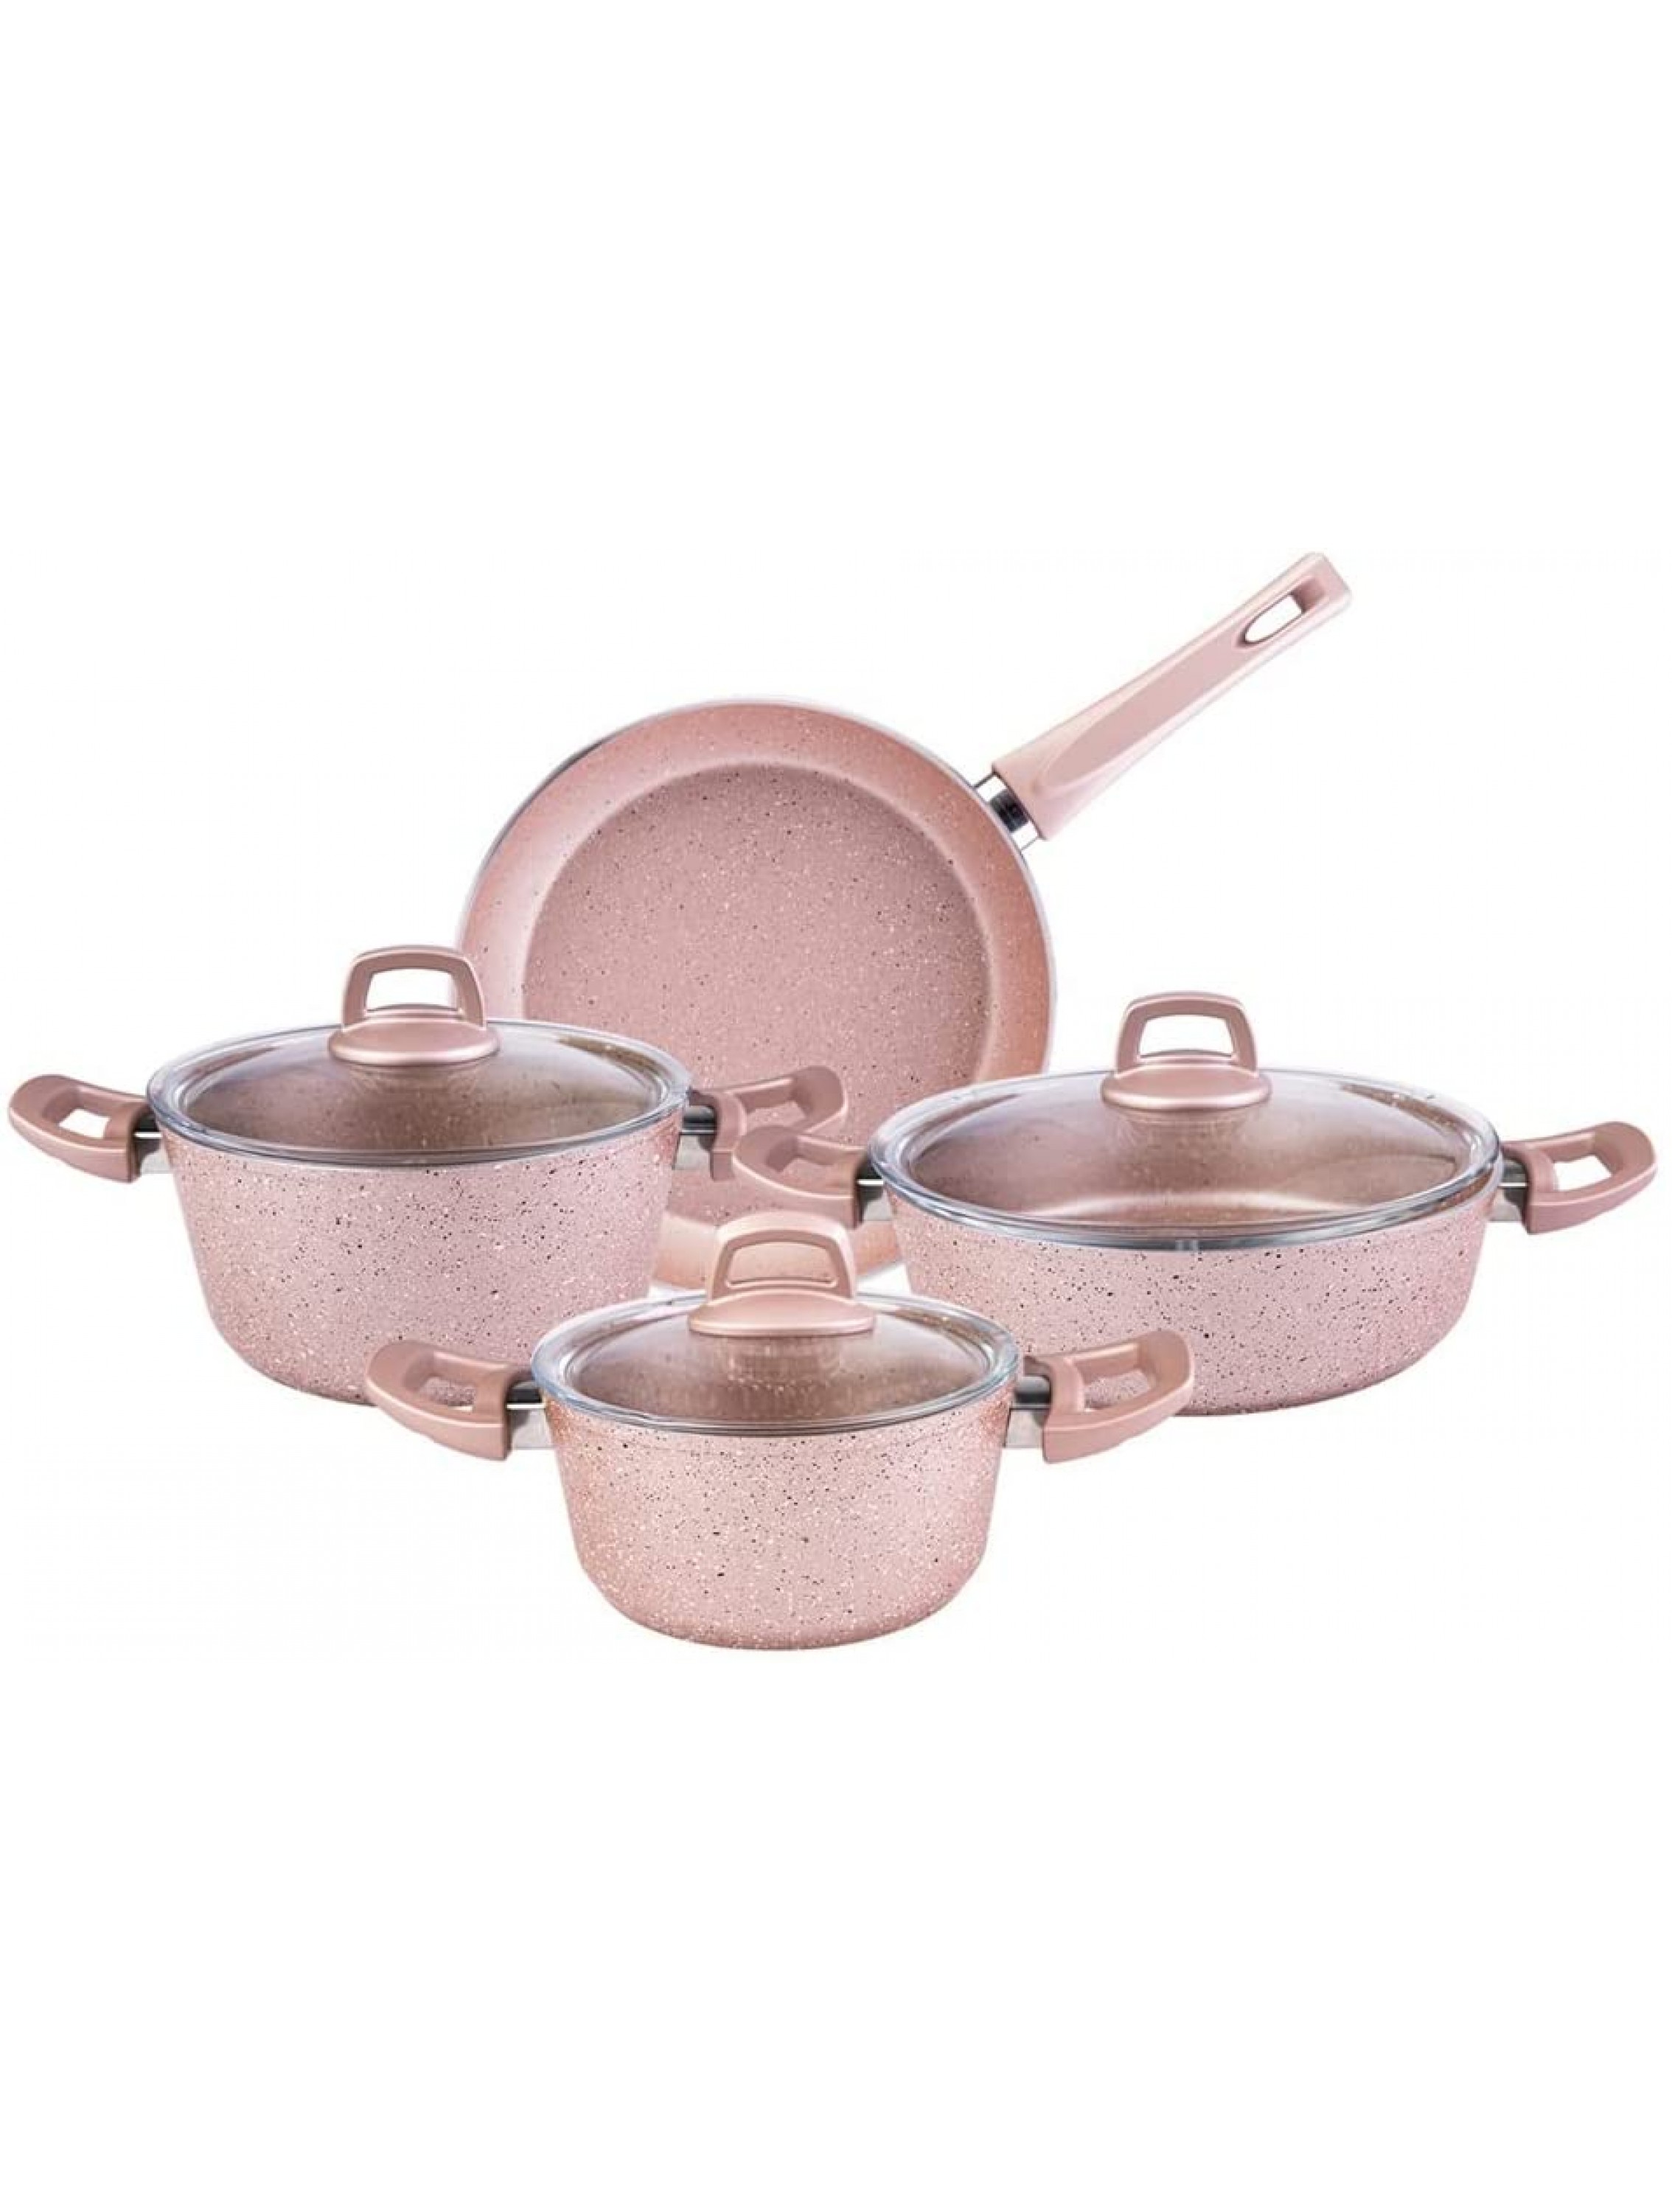 QUIAN 7Pcs set Cookware Set Kitchenware Saucepan Cooking Pot and Pan Set Non-Stıck Granite Stainless Steel Kitchen Color : Pink - B1RJJQB8T